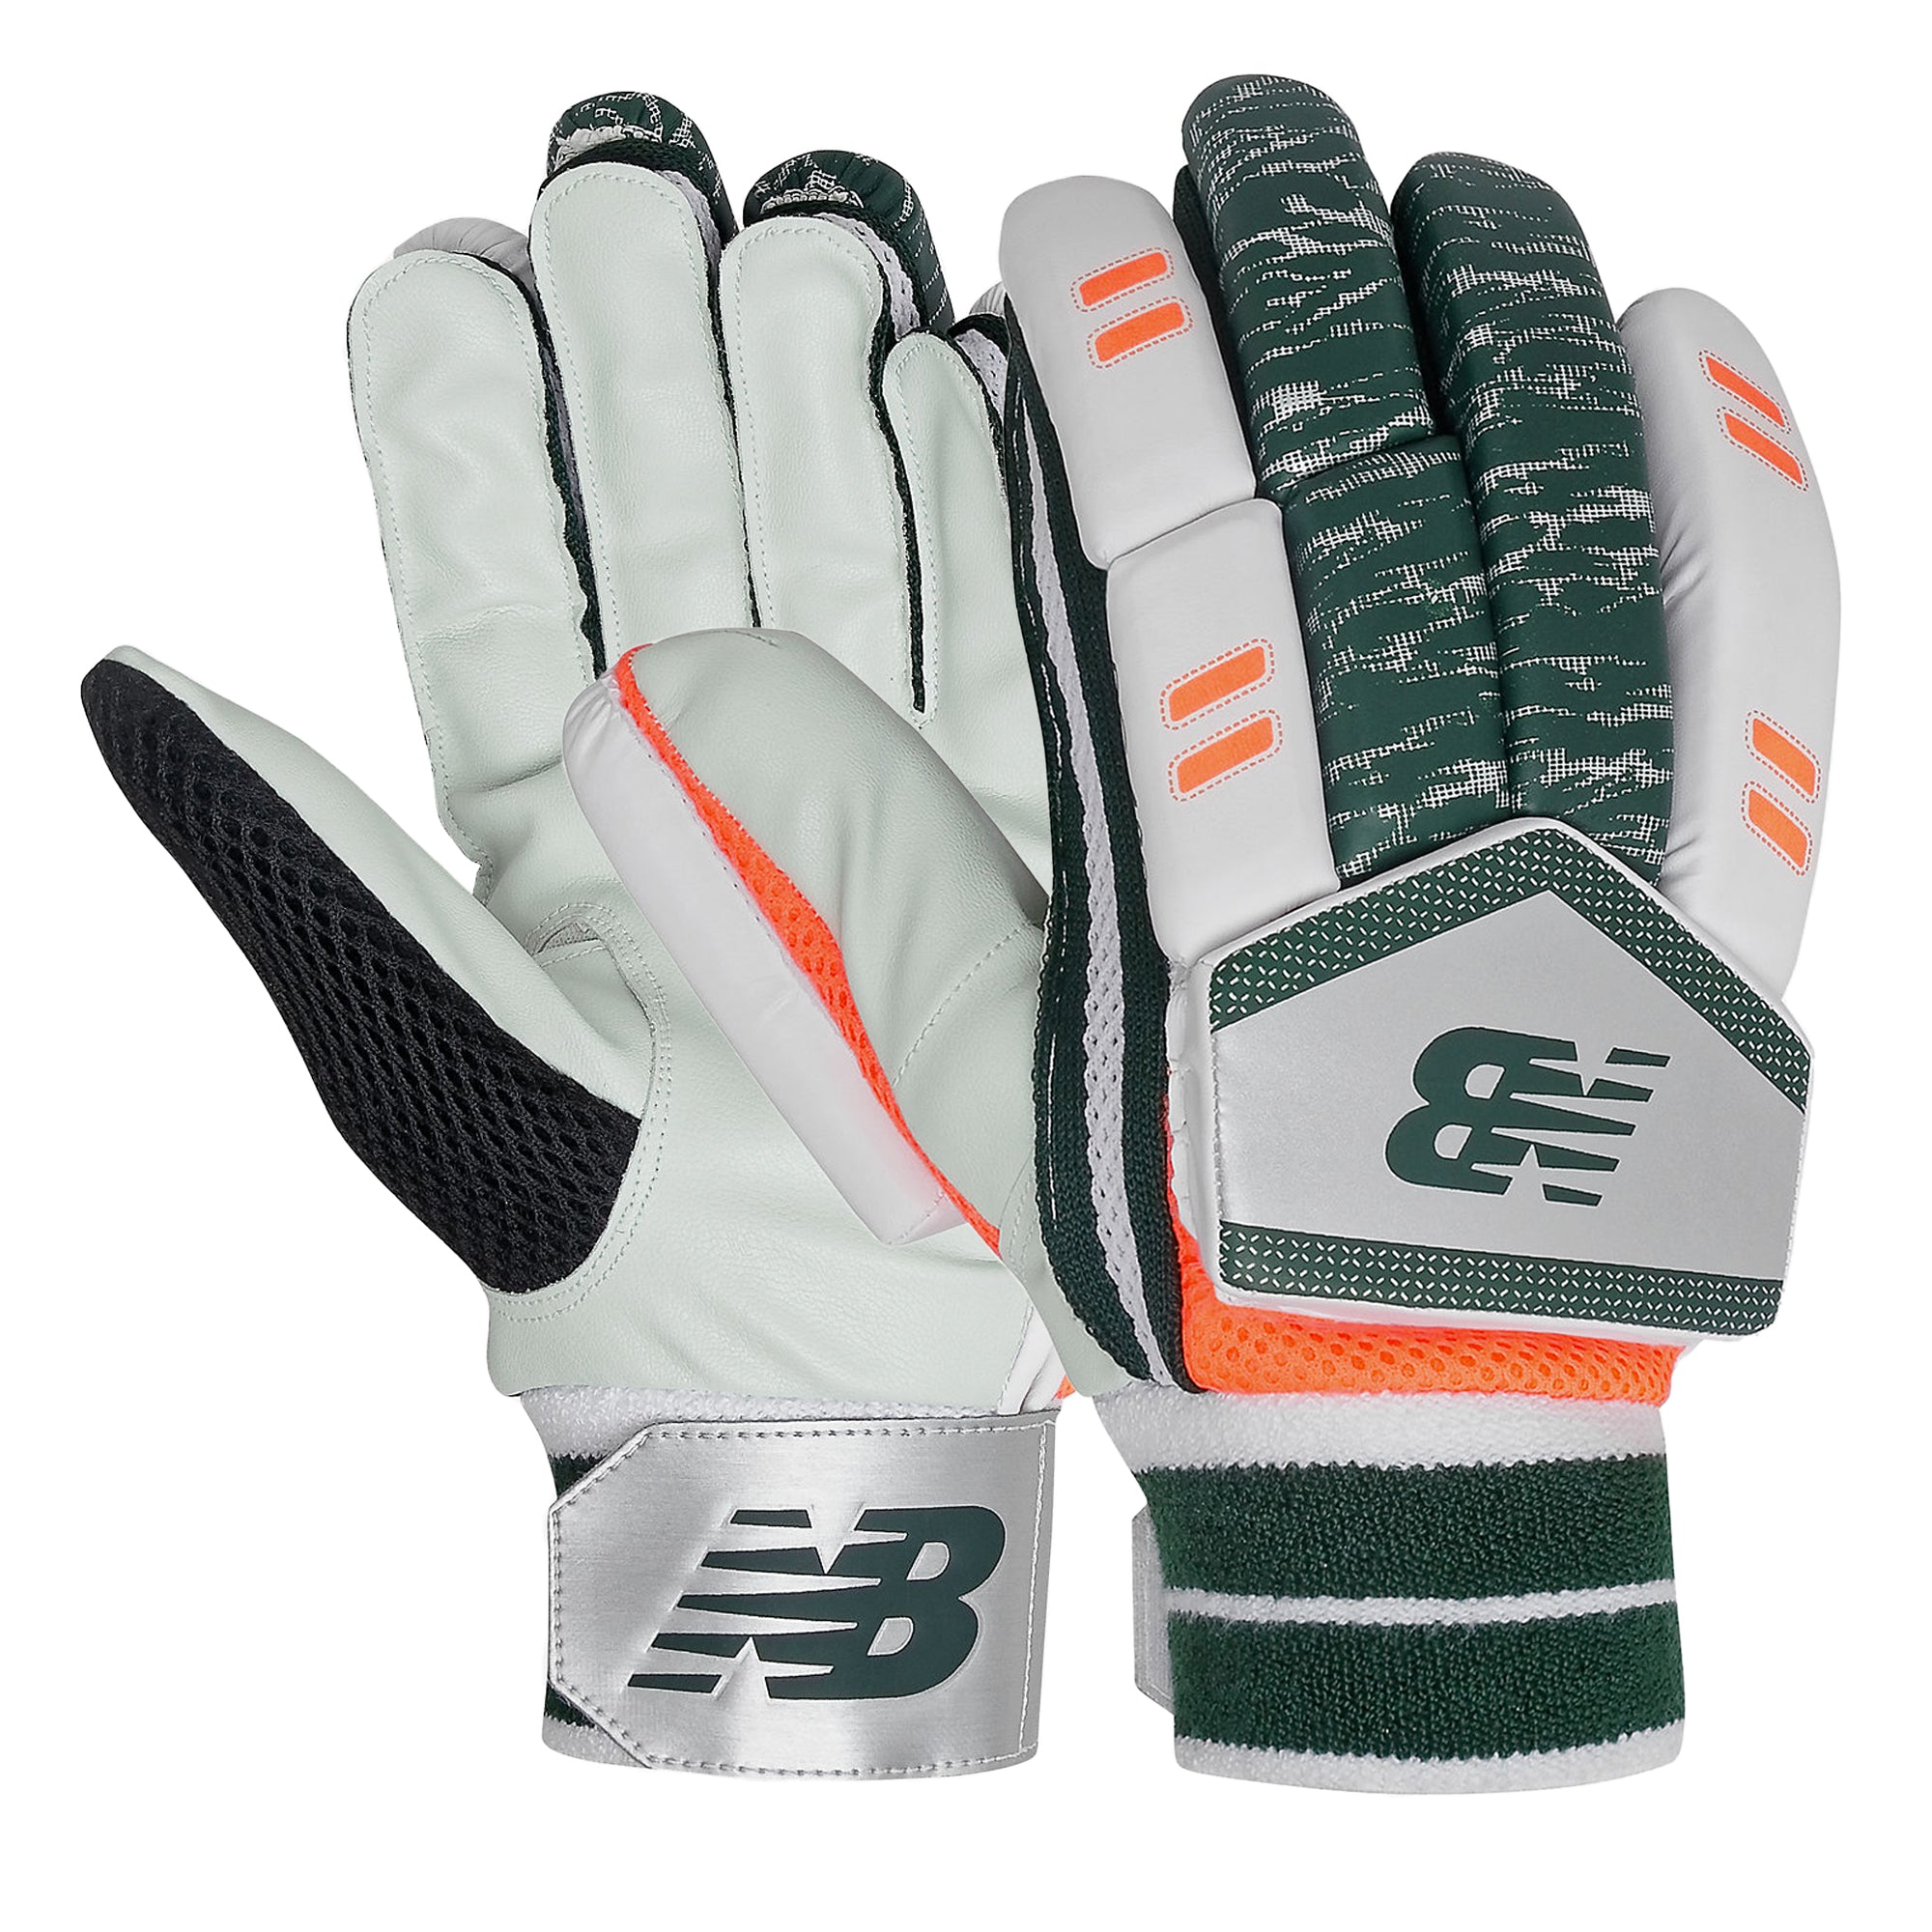 Online Sale on New Balance DC Batting Gloves | Stag Sports Australia